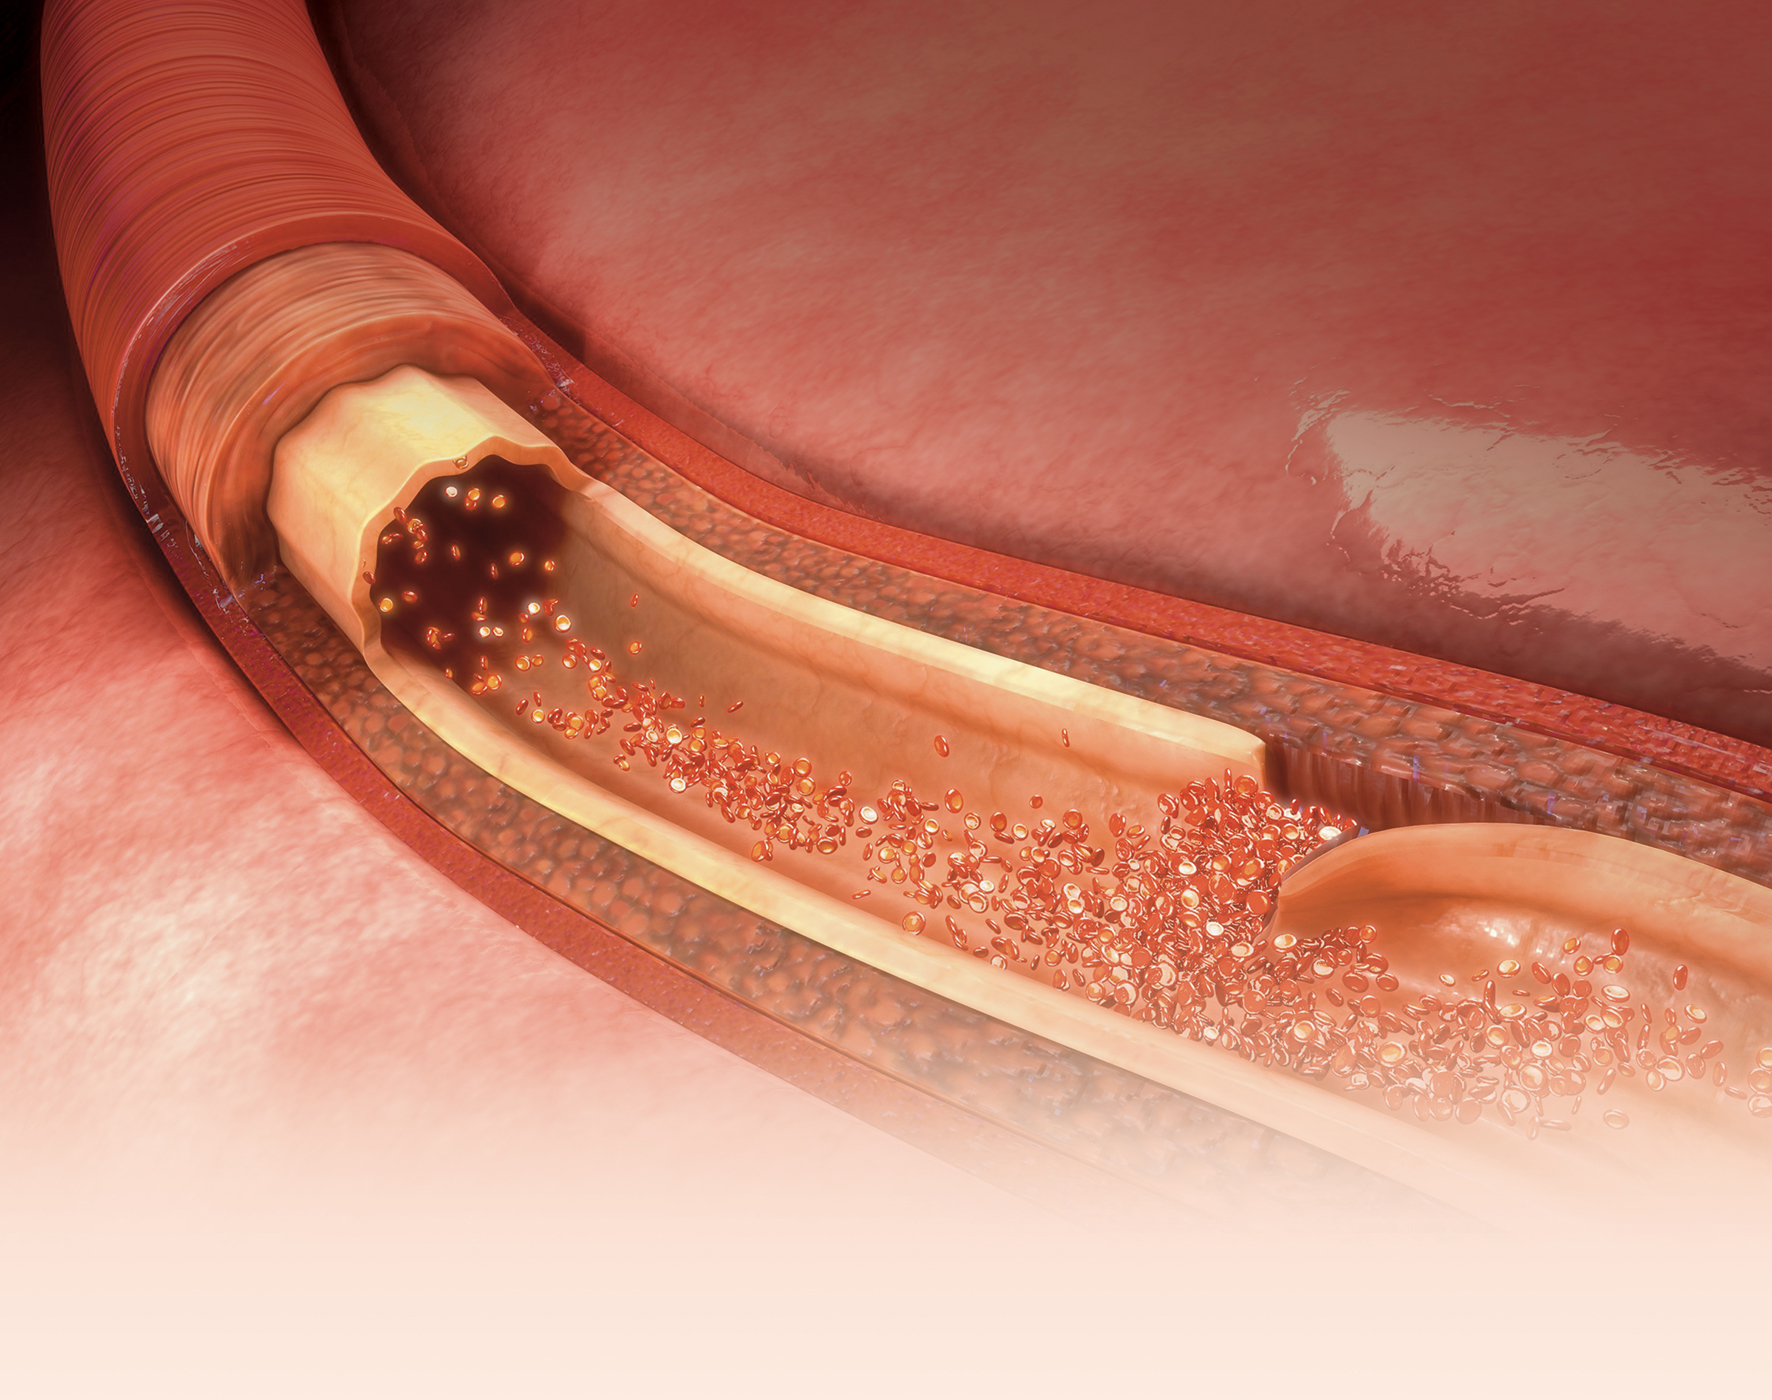 Spontaneous Coronary Artery Dissection — Not Just An Ordinary Heart